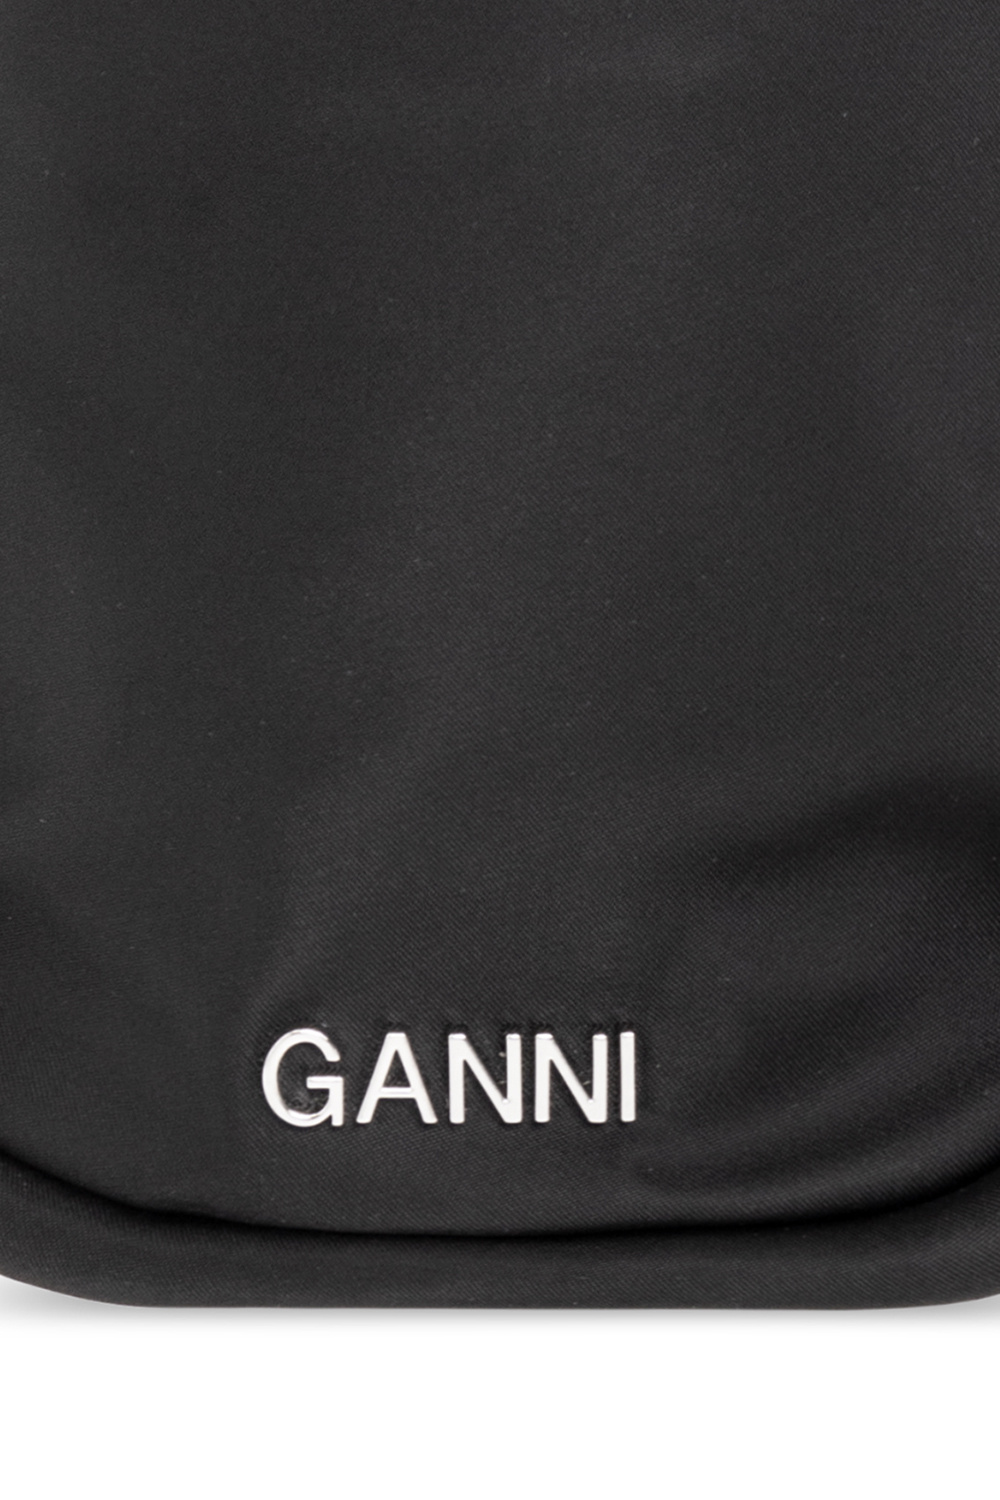 Ganni Handbag with logo